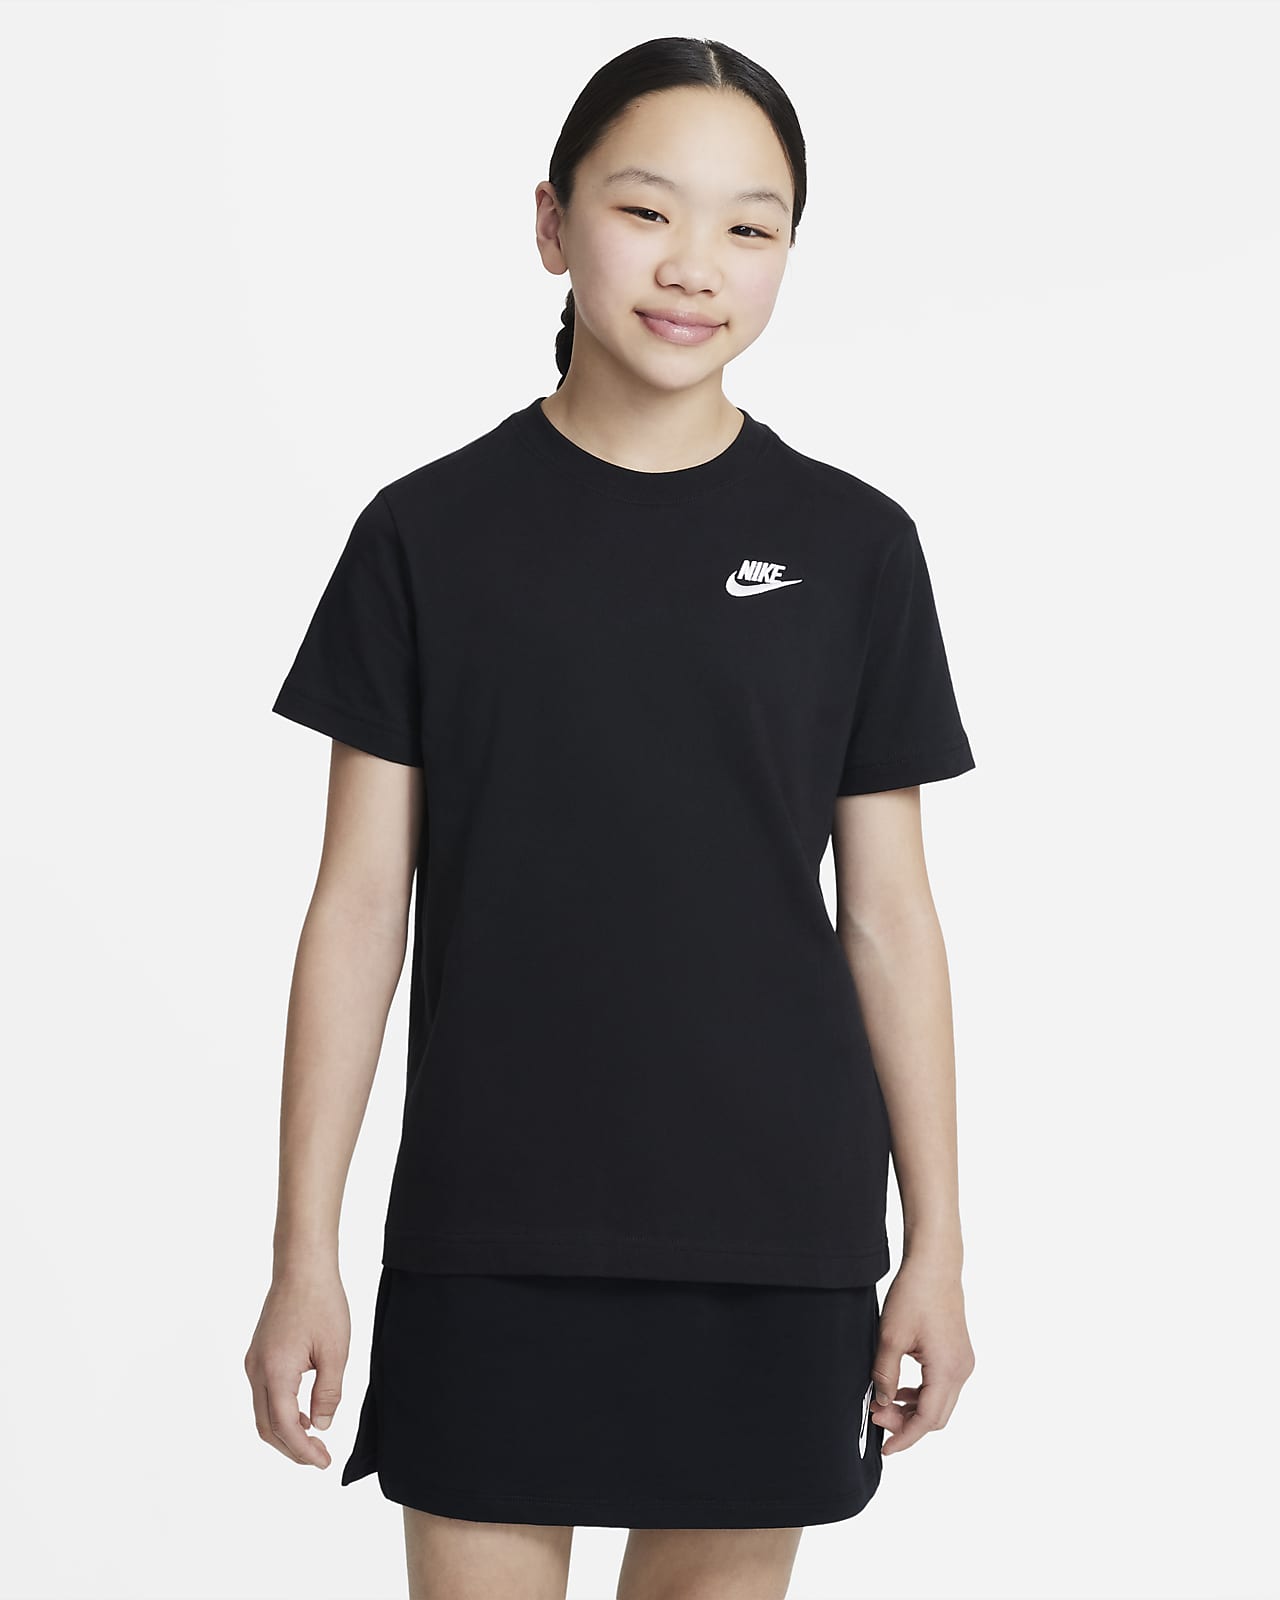 Susurro jardín transatlántico Nike Sportswear Older Kids' (Girls') T-Shirt. Nike FI